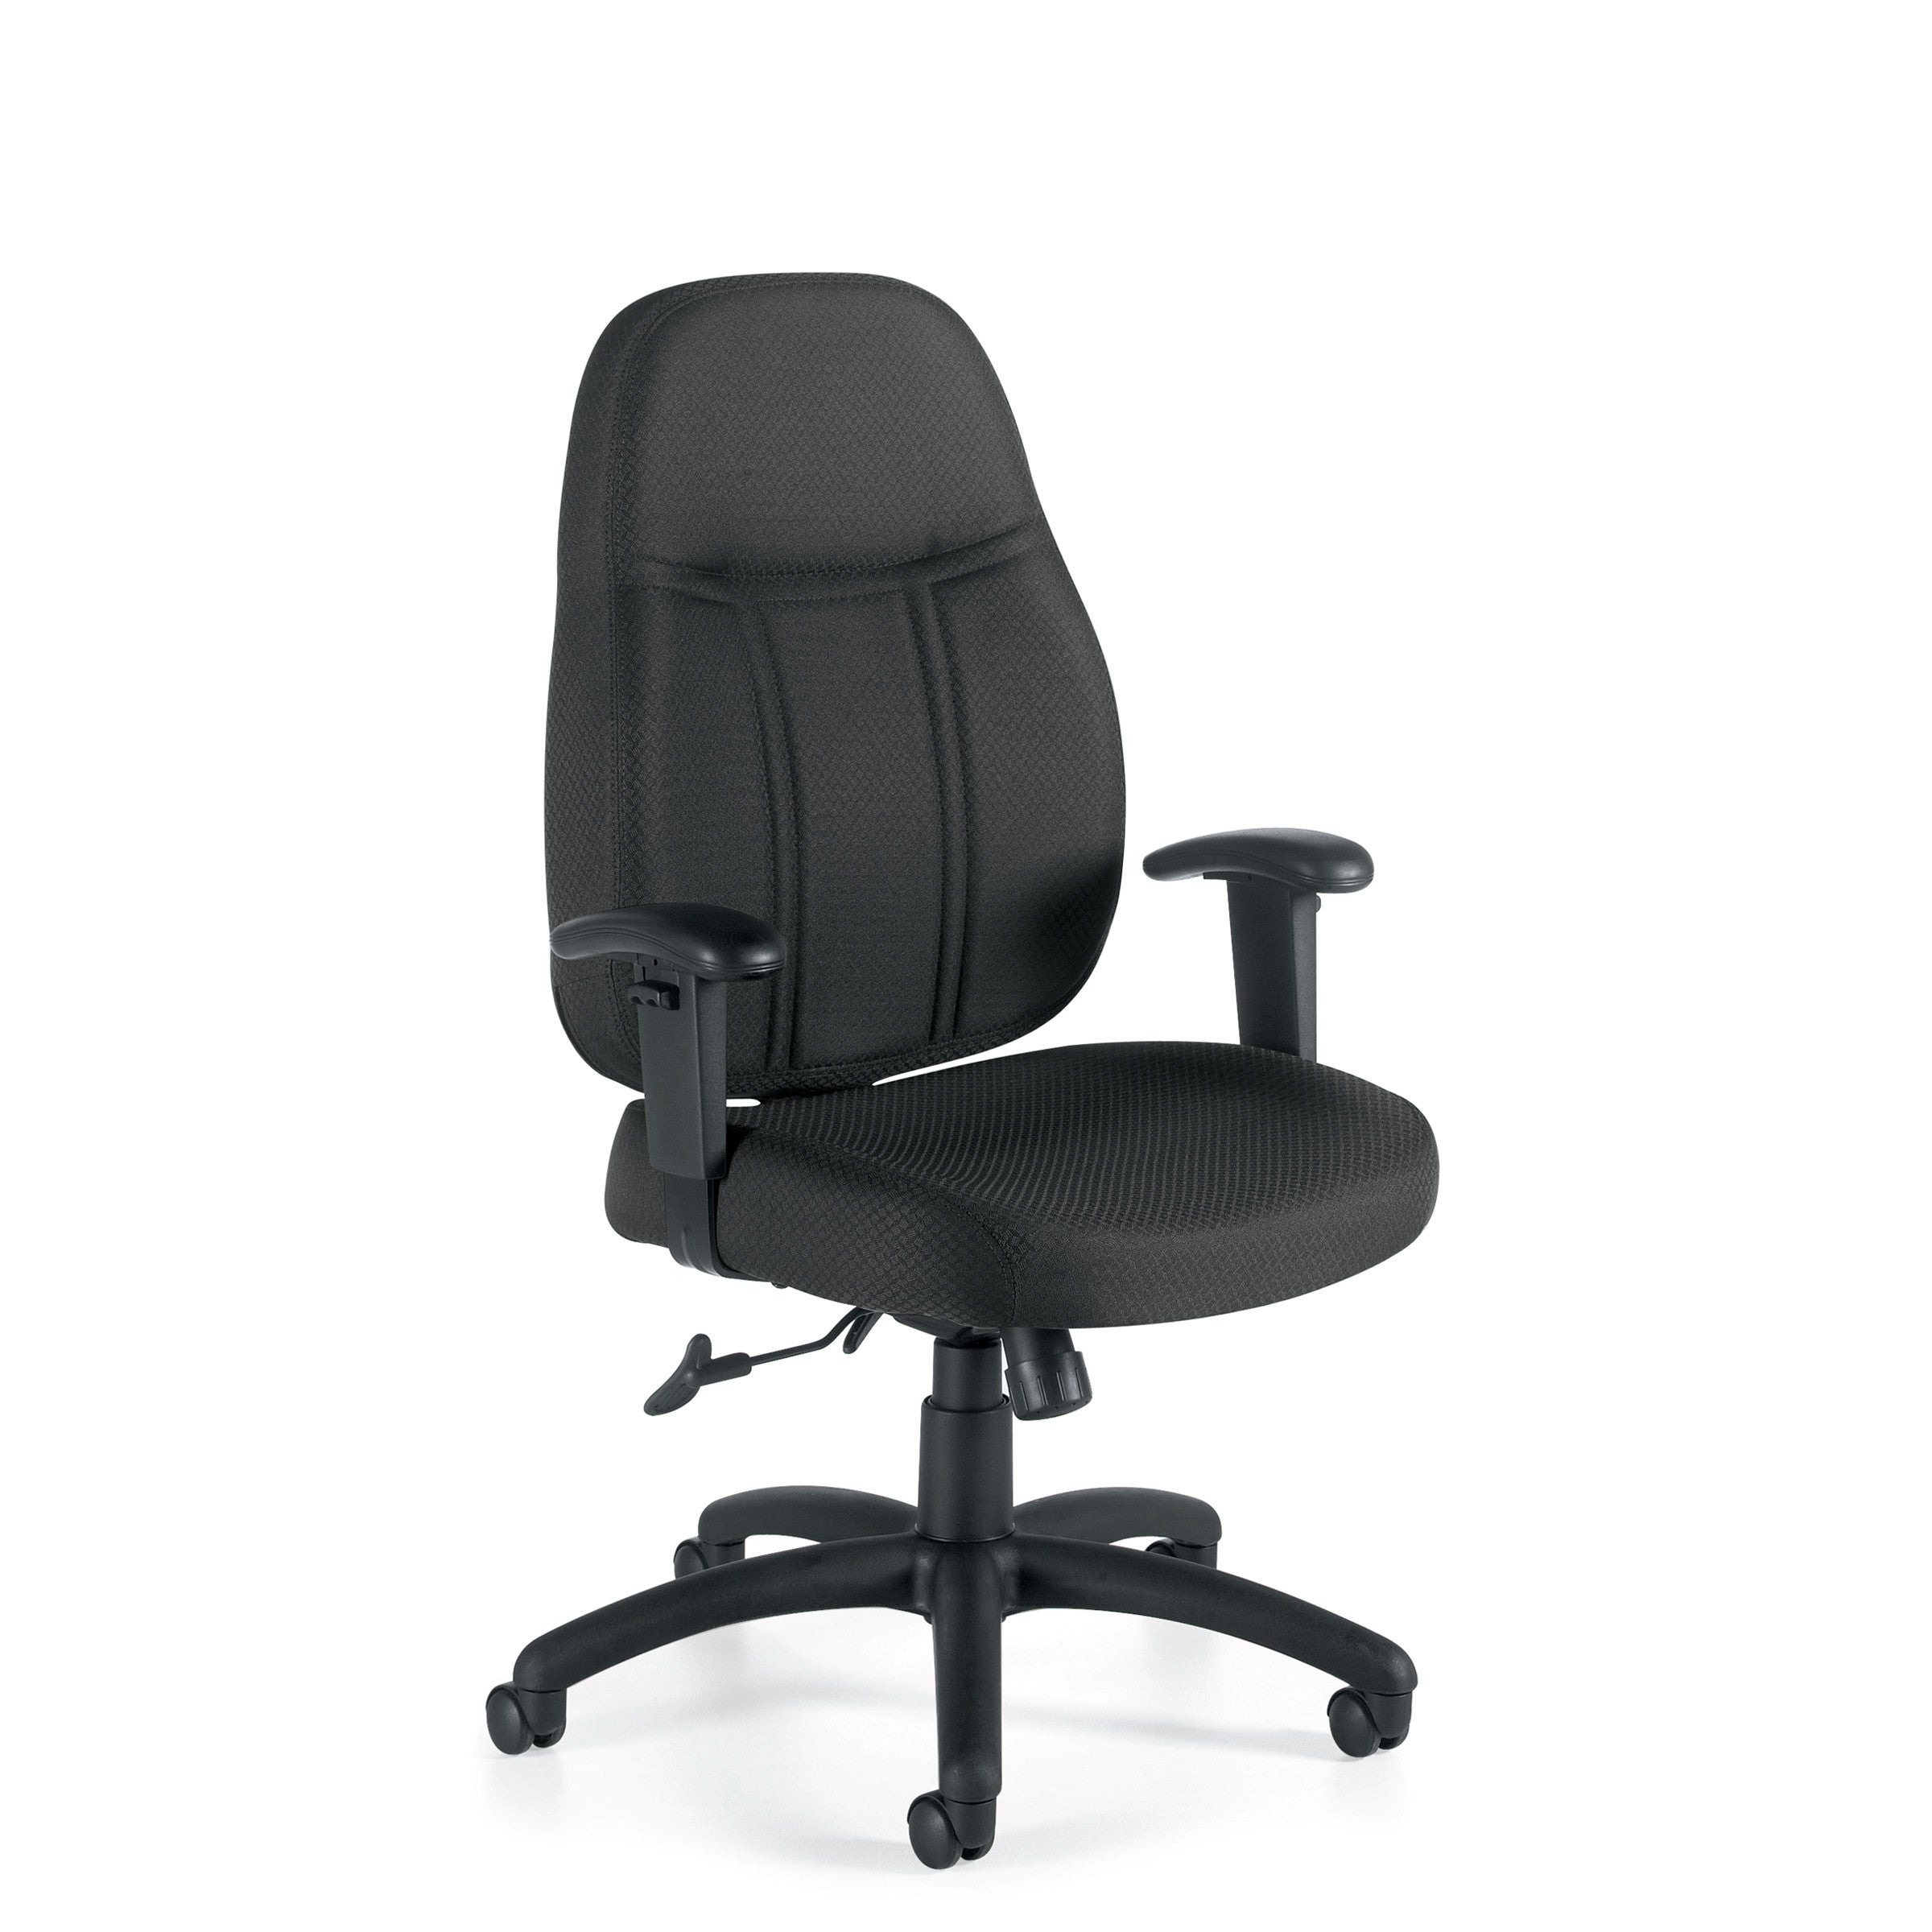 Customized Multi-Function Chair G11651-2 - Kainosbuy.com